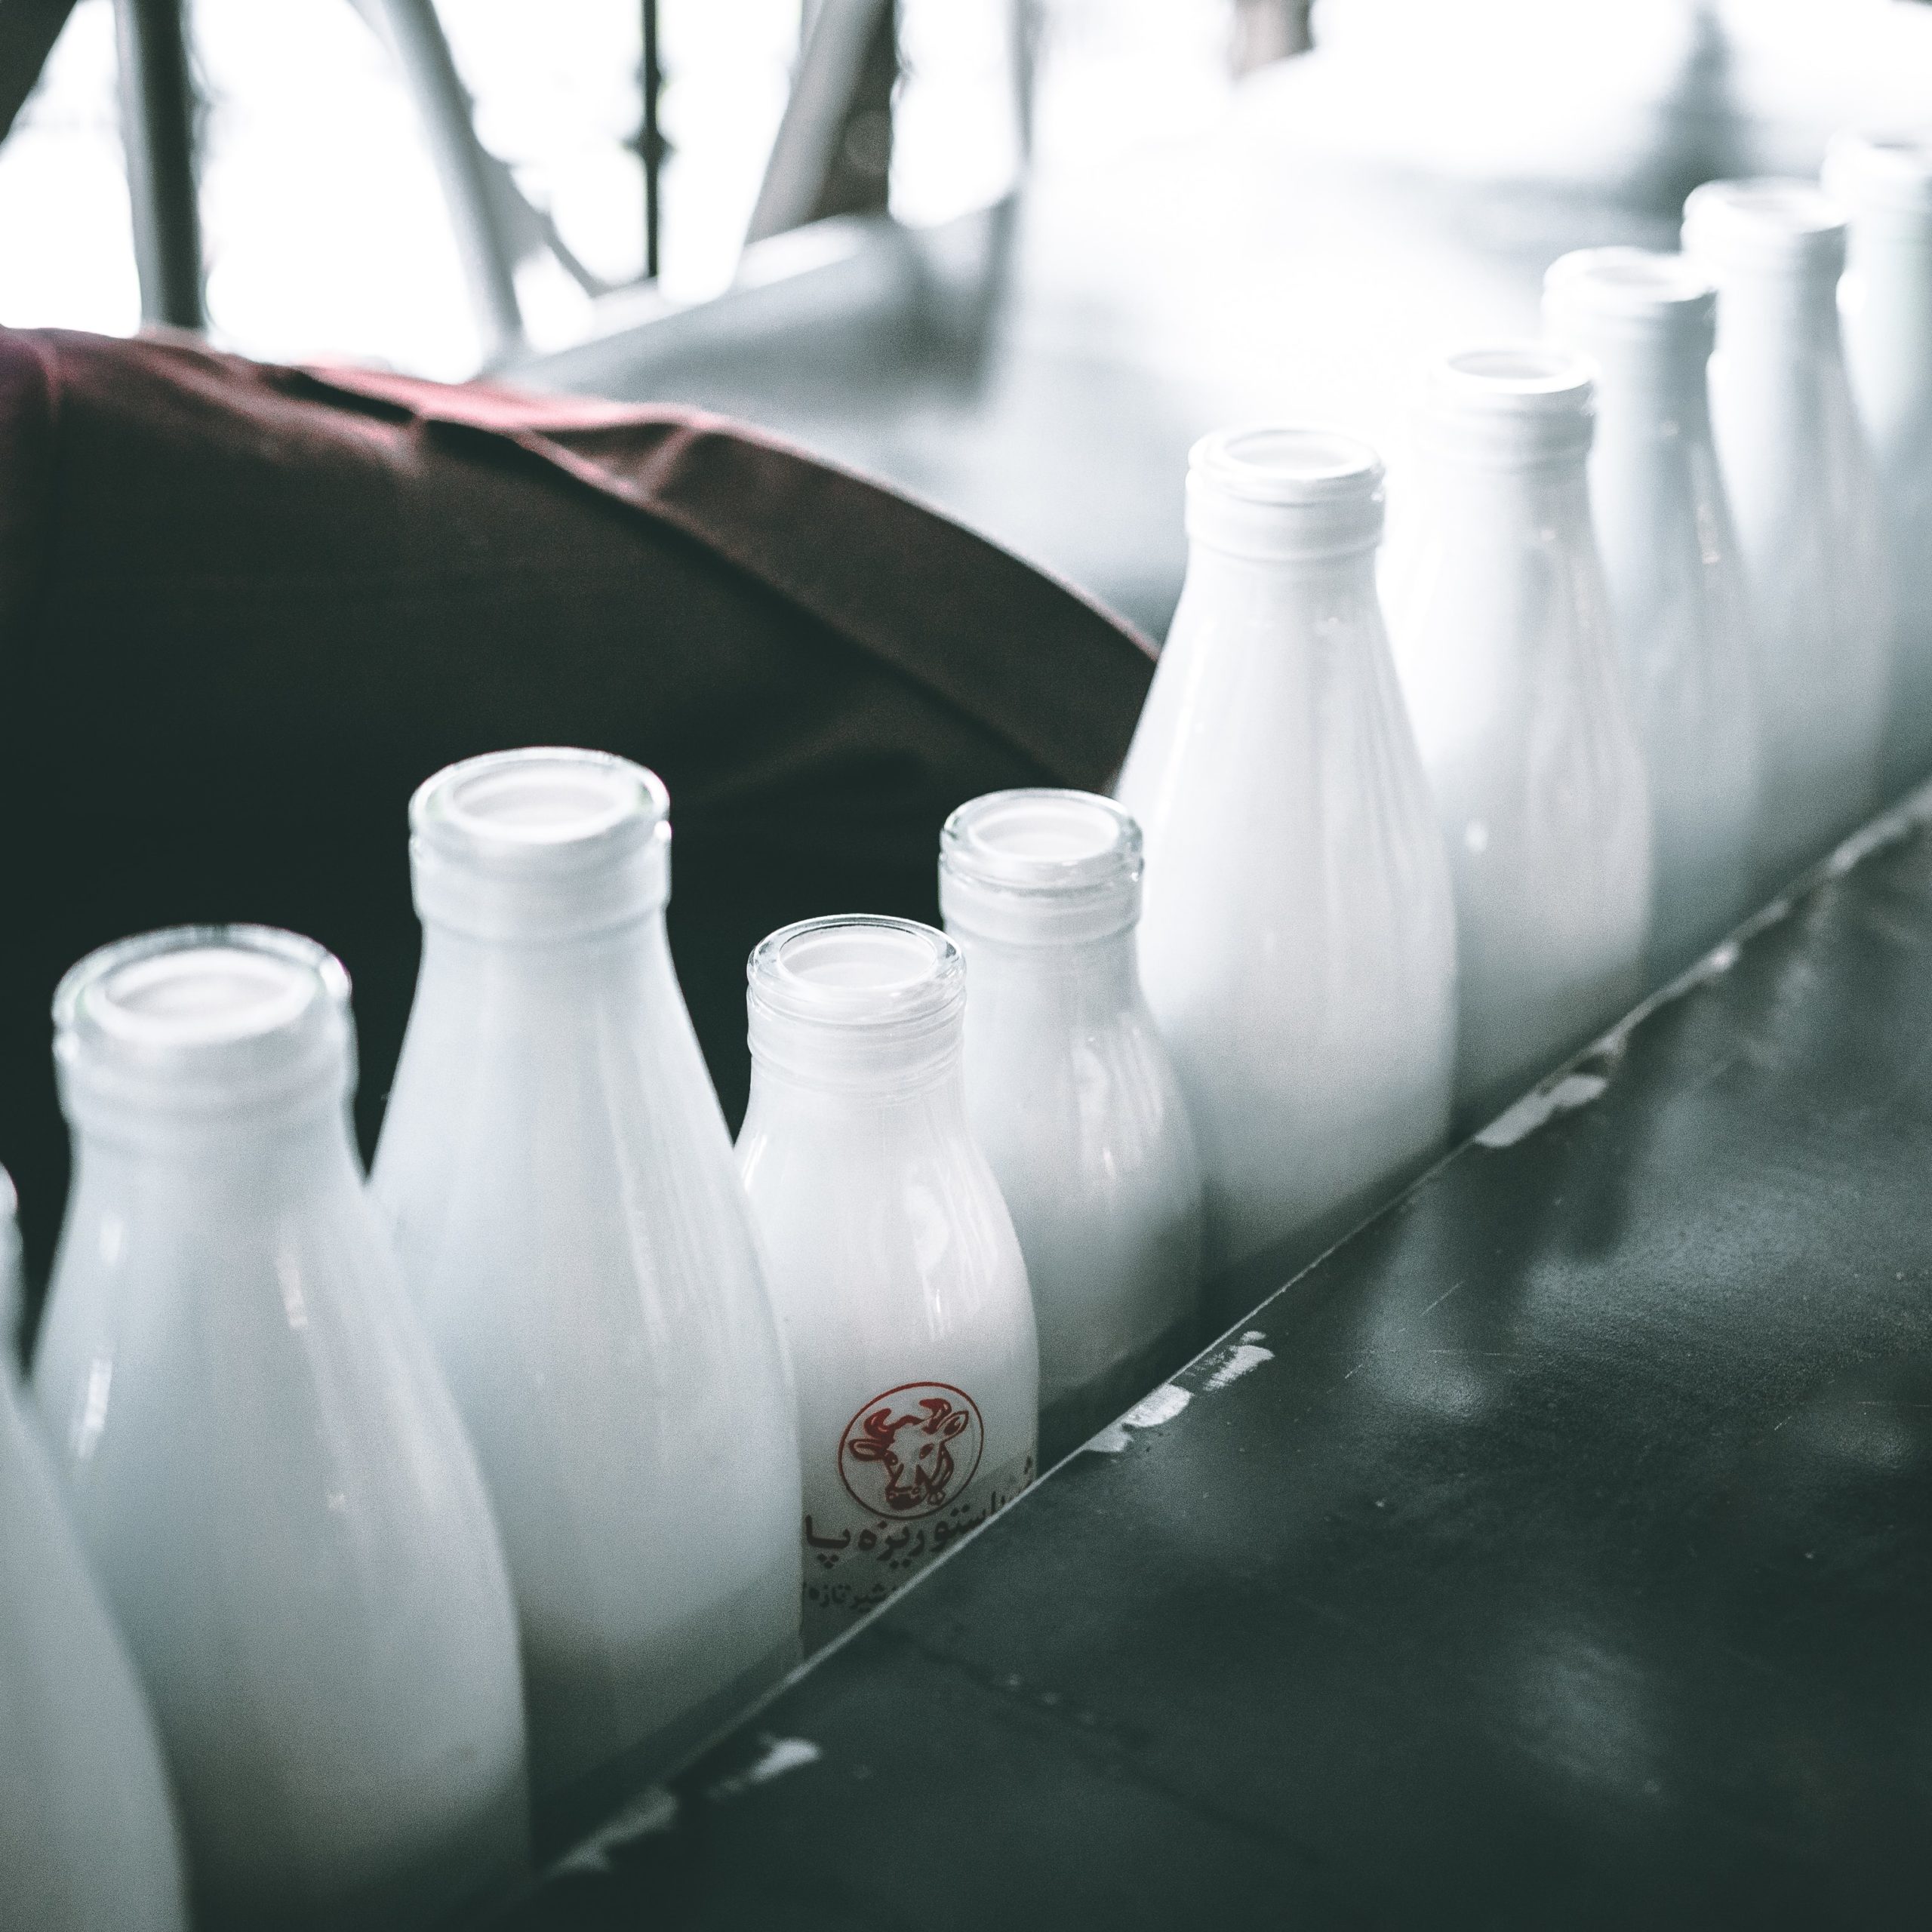 Is Dairy Good For Your Bones?